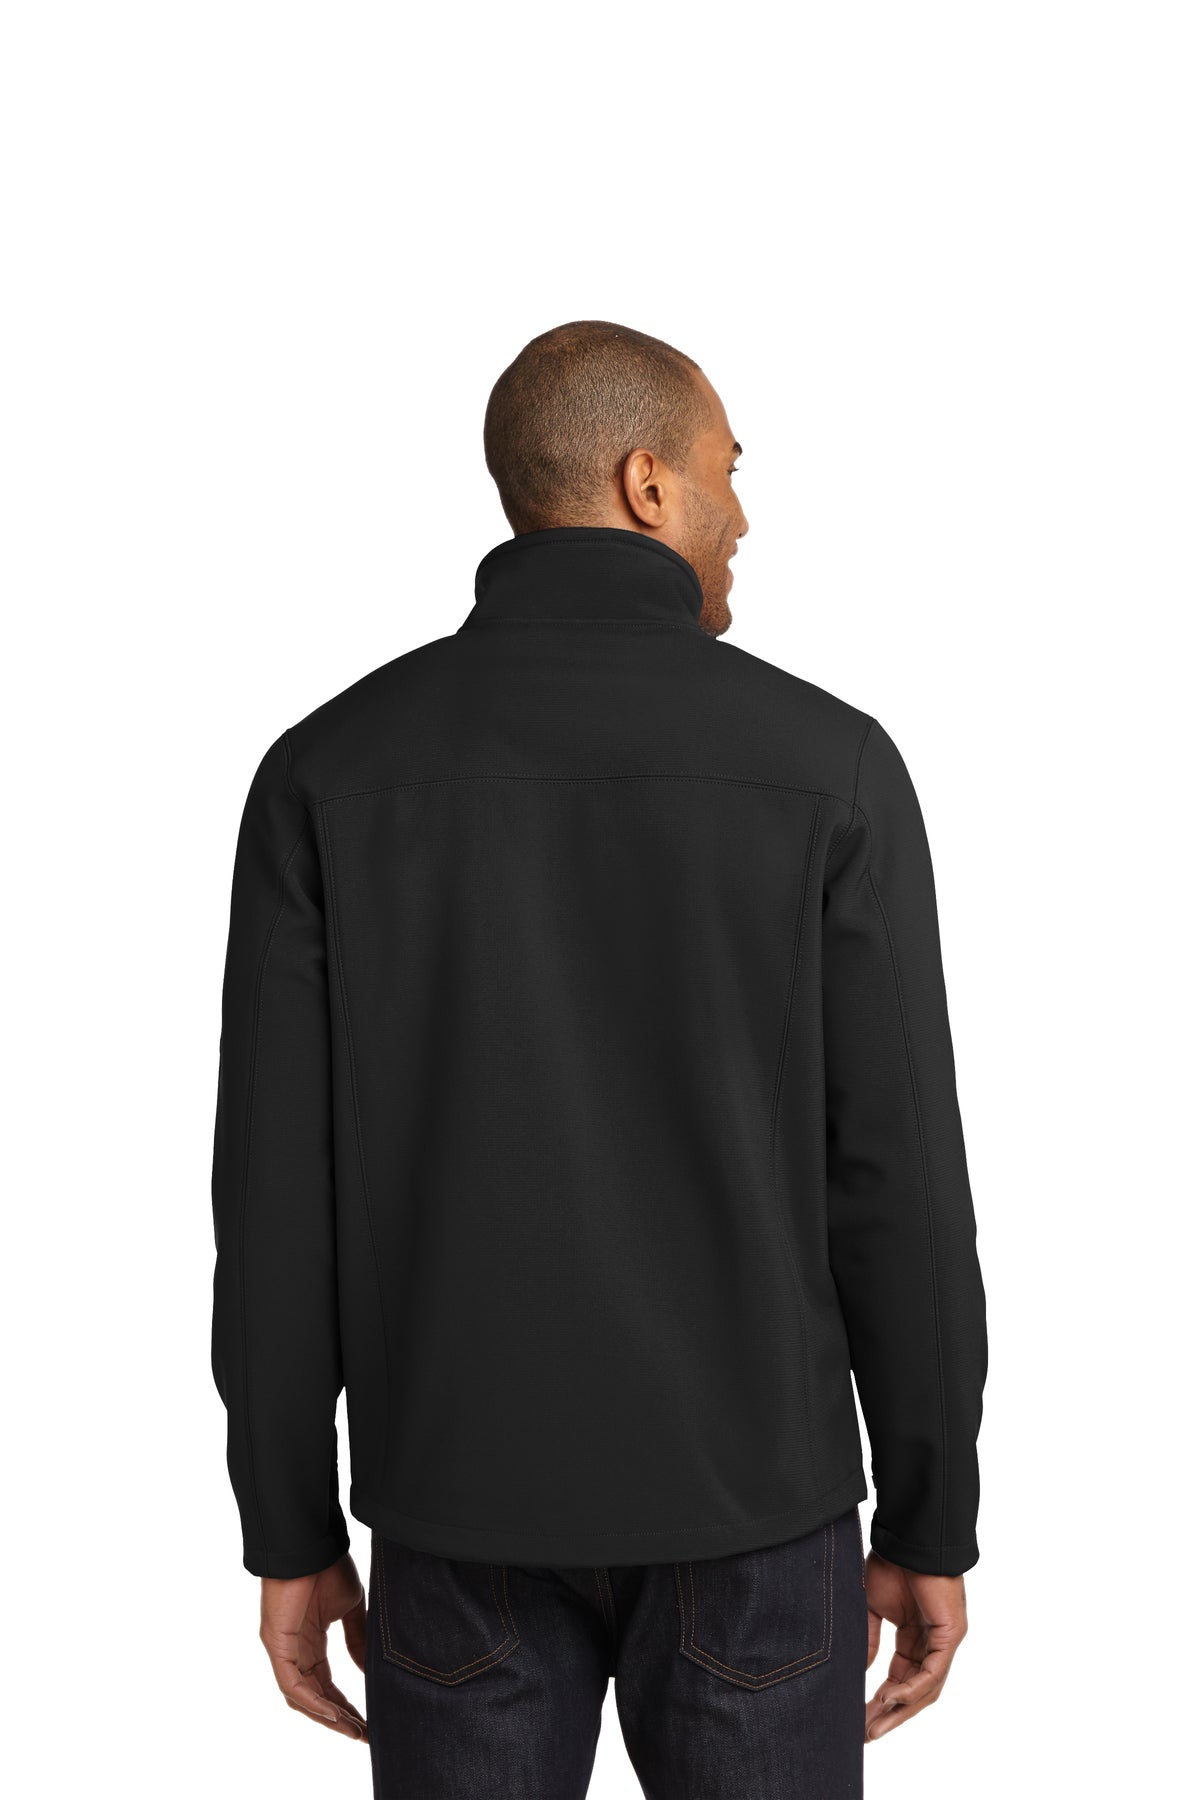 eddie bauer_eb534 _black/ black_company_logo_jackets